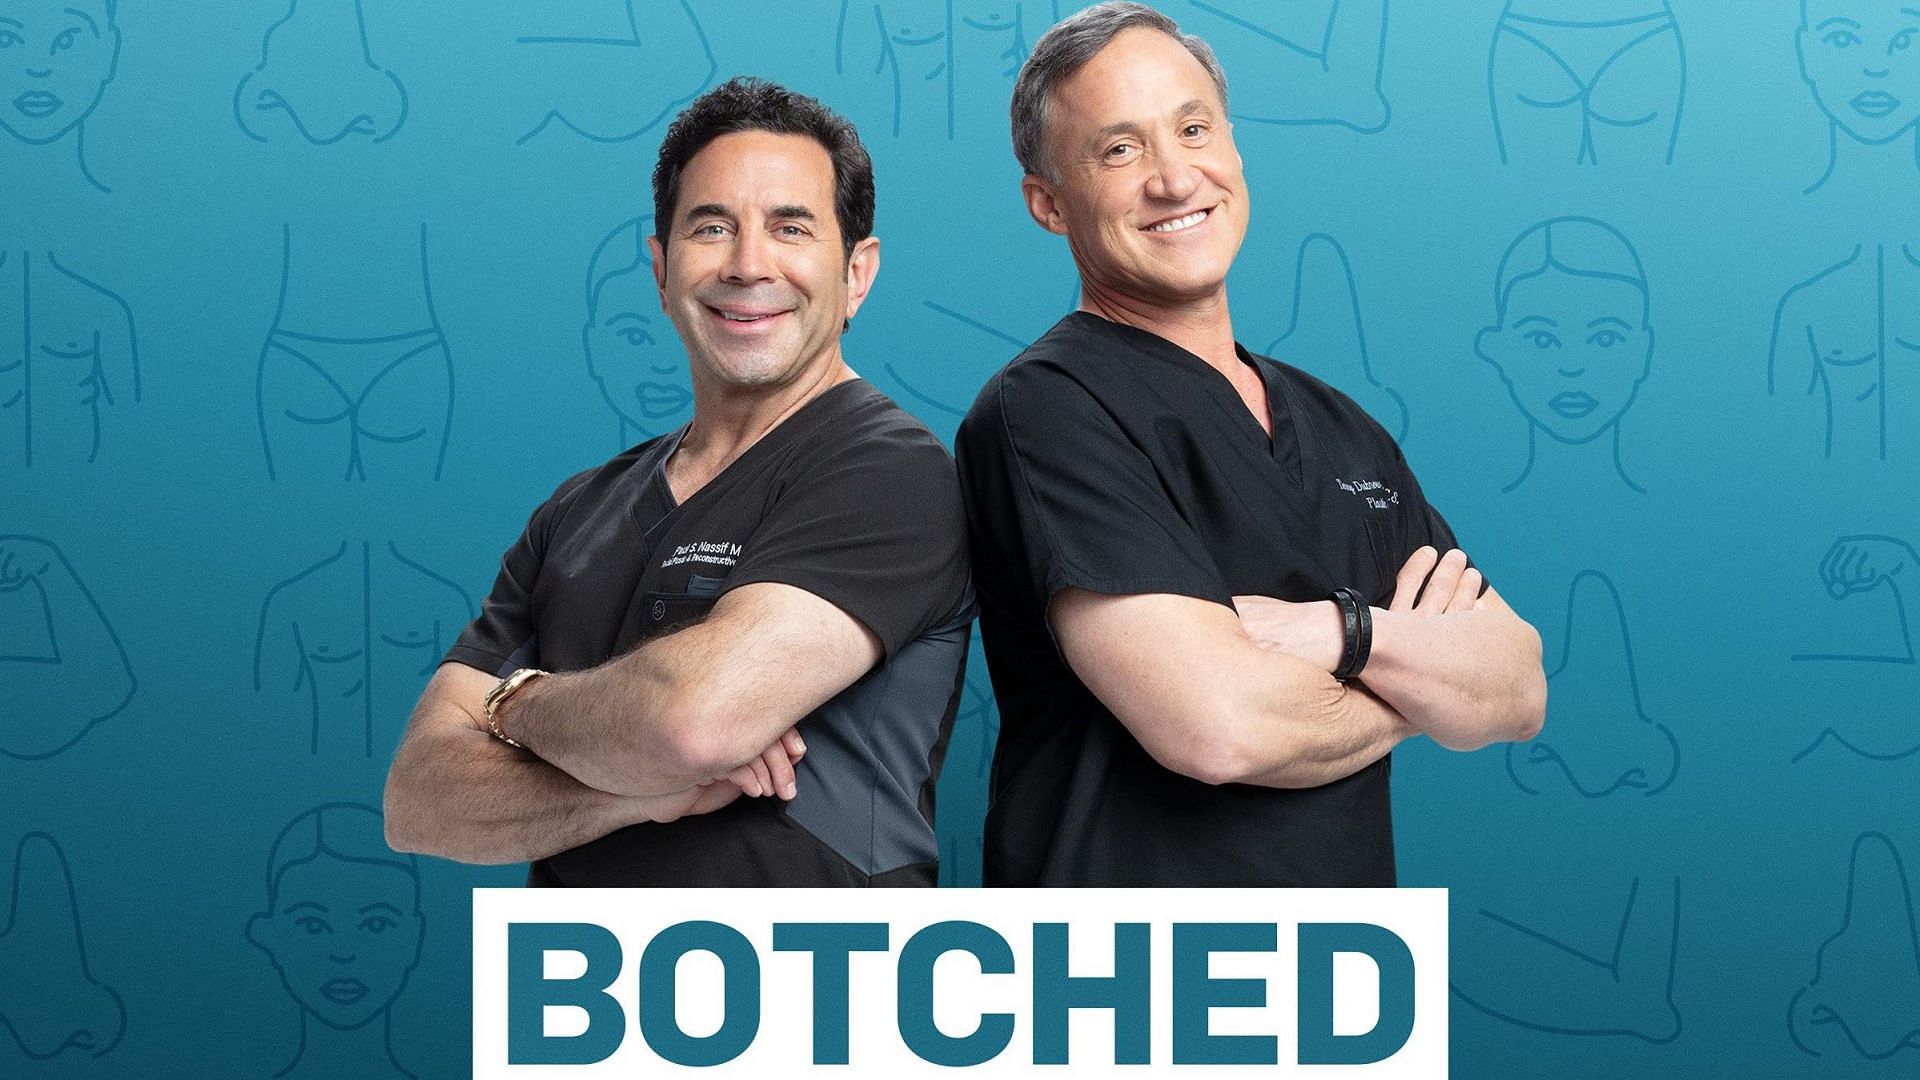 Botched Season 7 (Image Via Amazon.com)